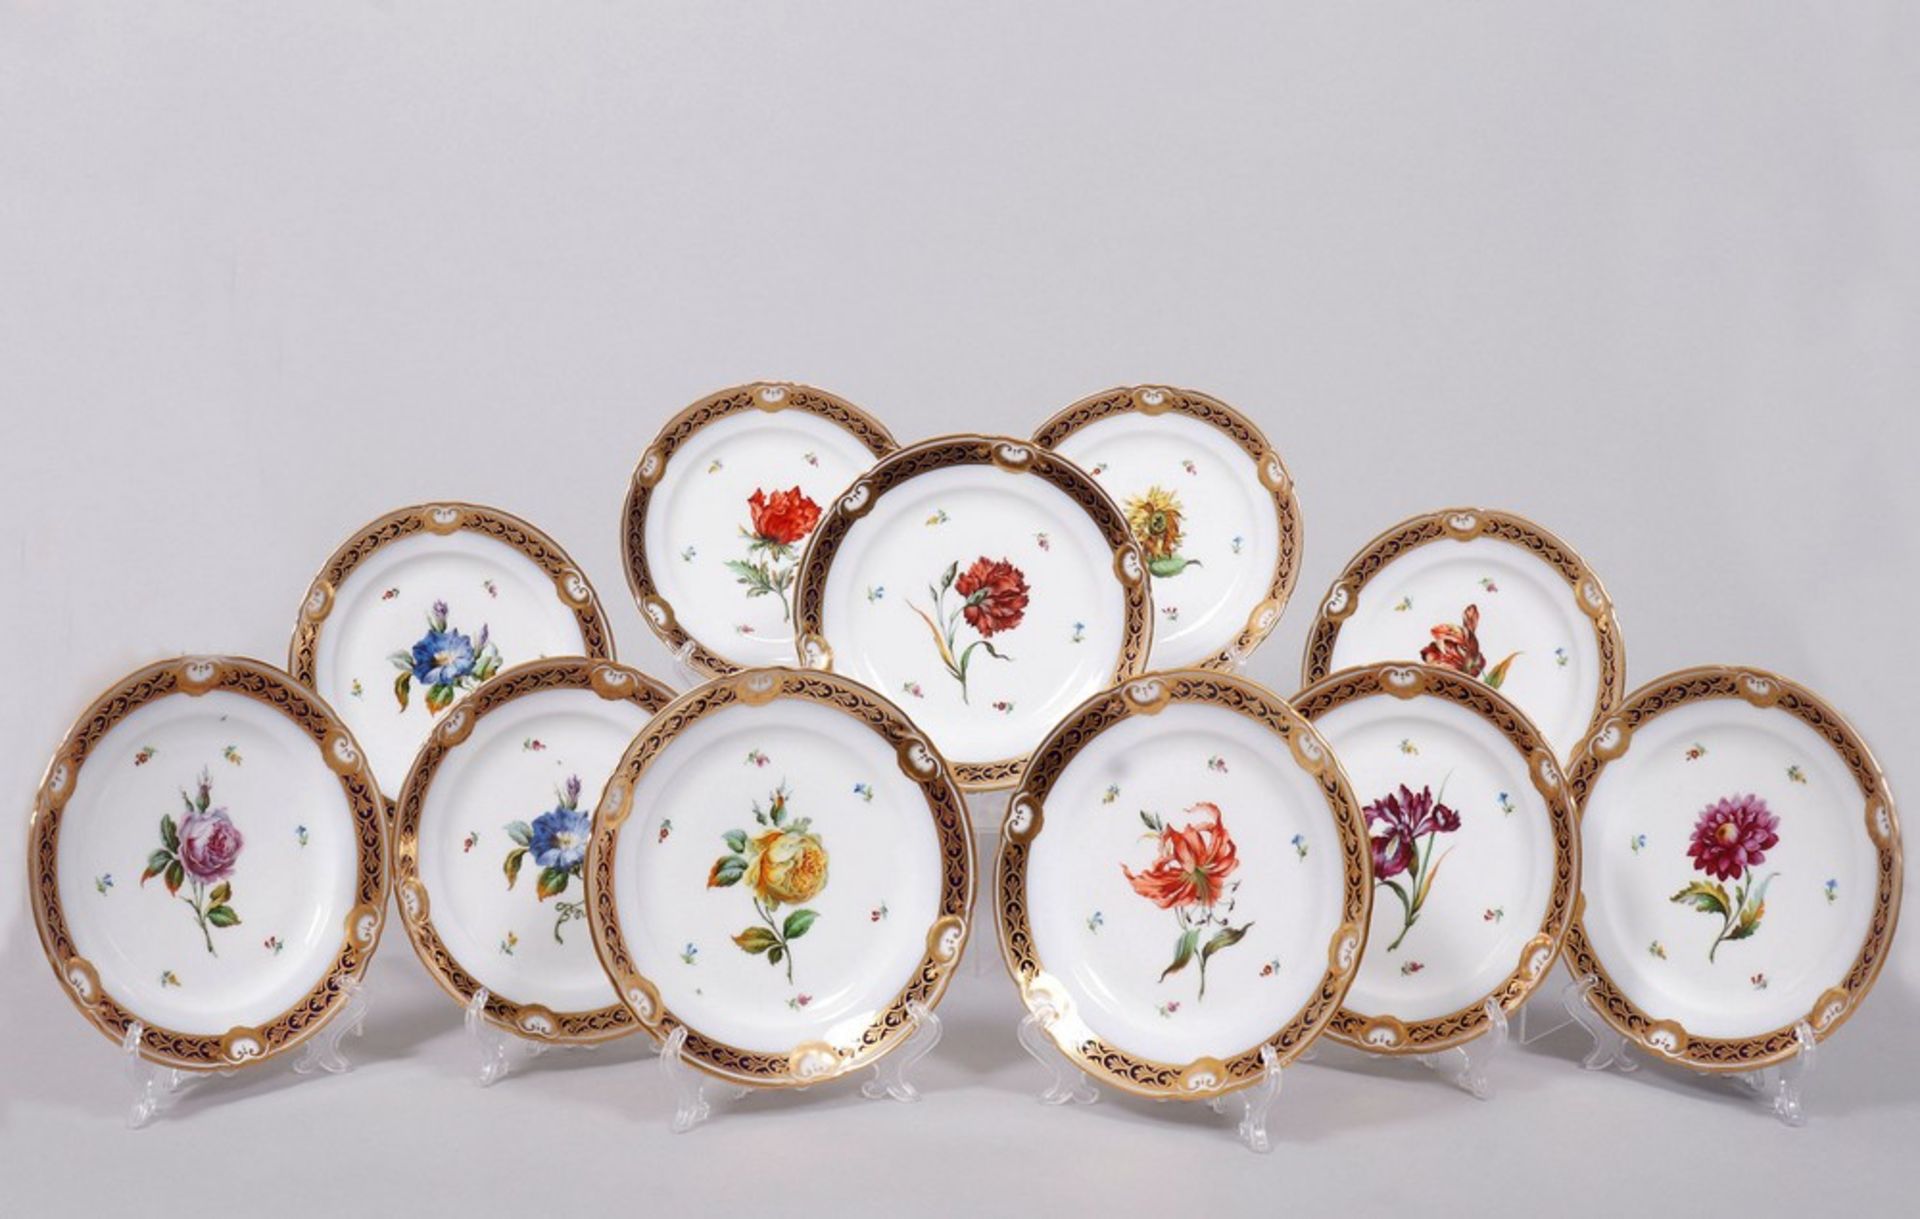 11 cake plates, Imperial Vienna, c. 1808